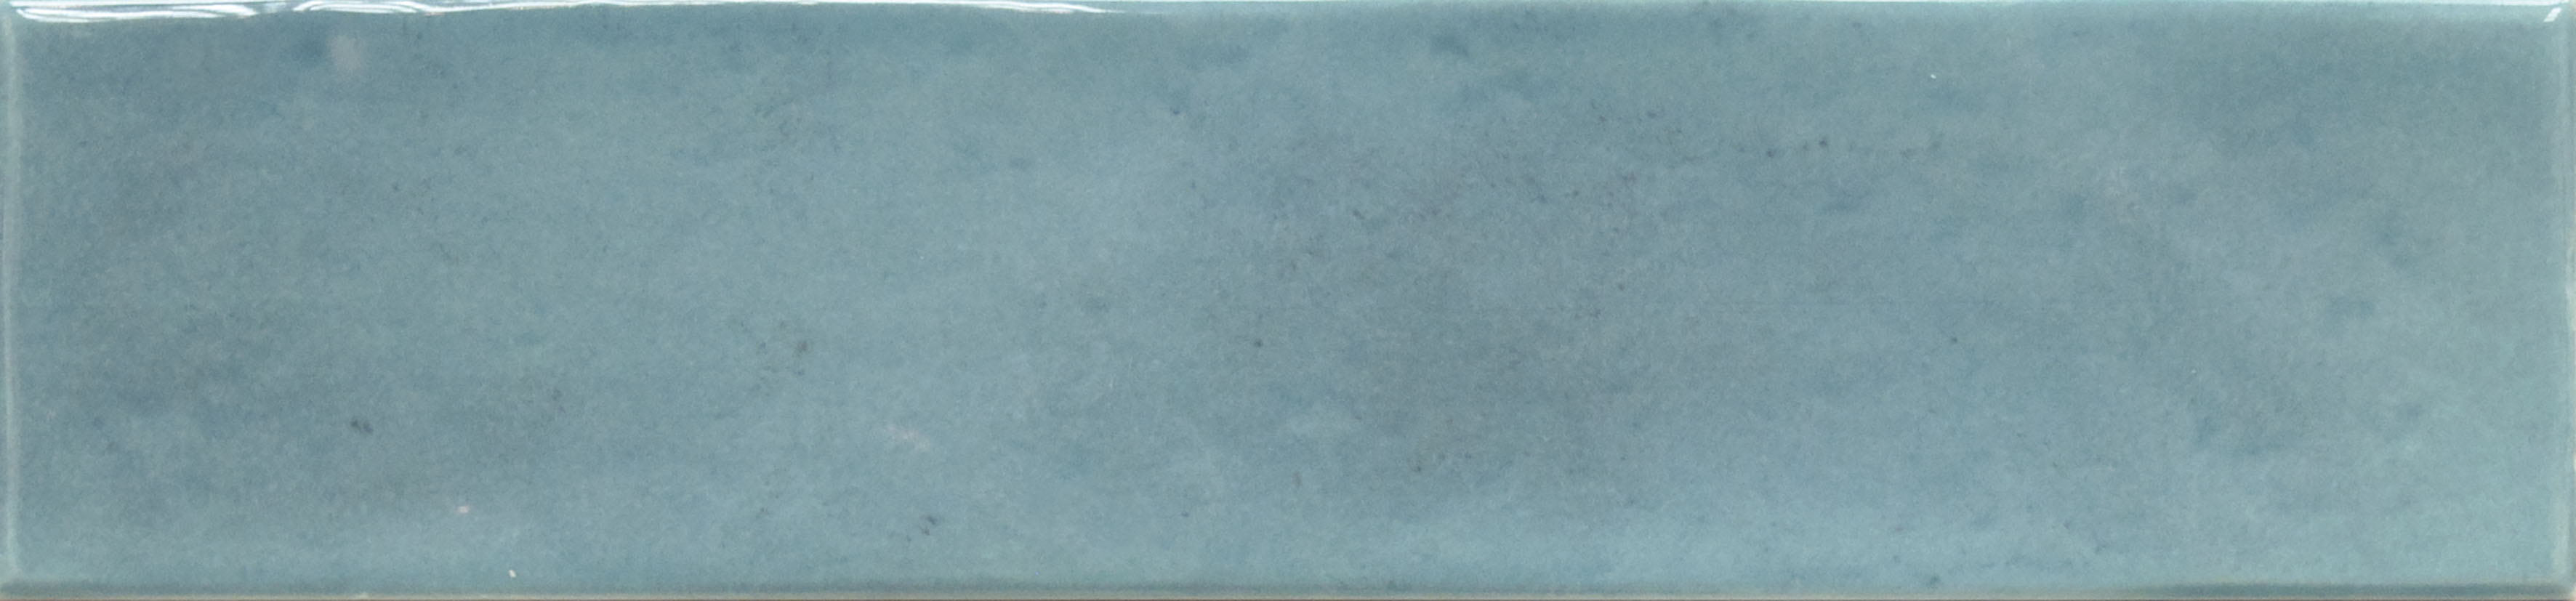 Catalea Gres Nyborg Metrofliese Blau glänzend 7,5x30 cm  